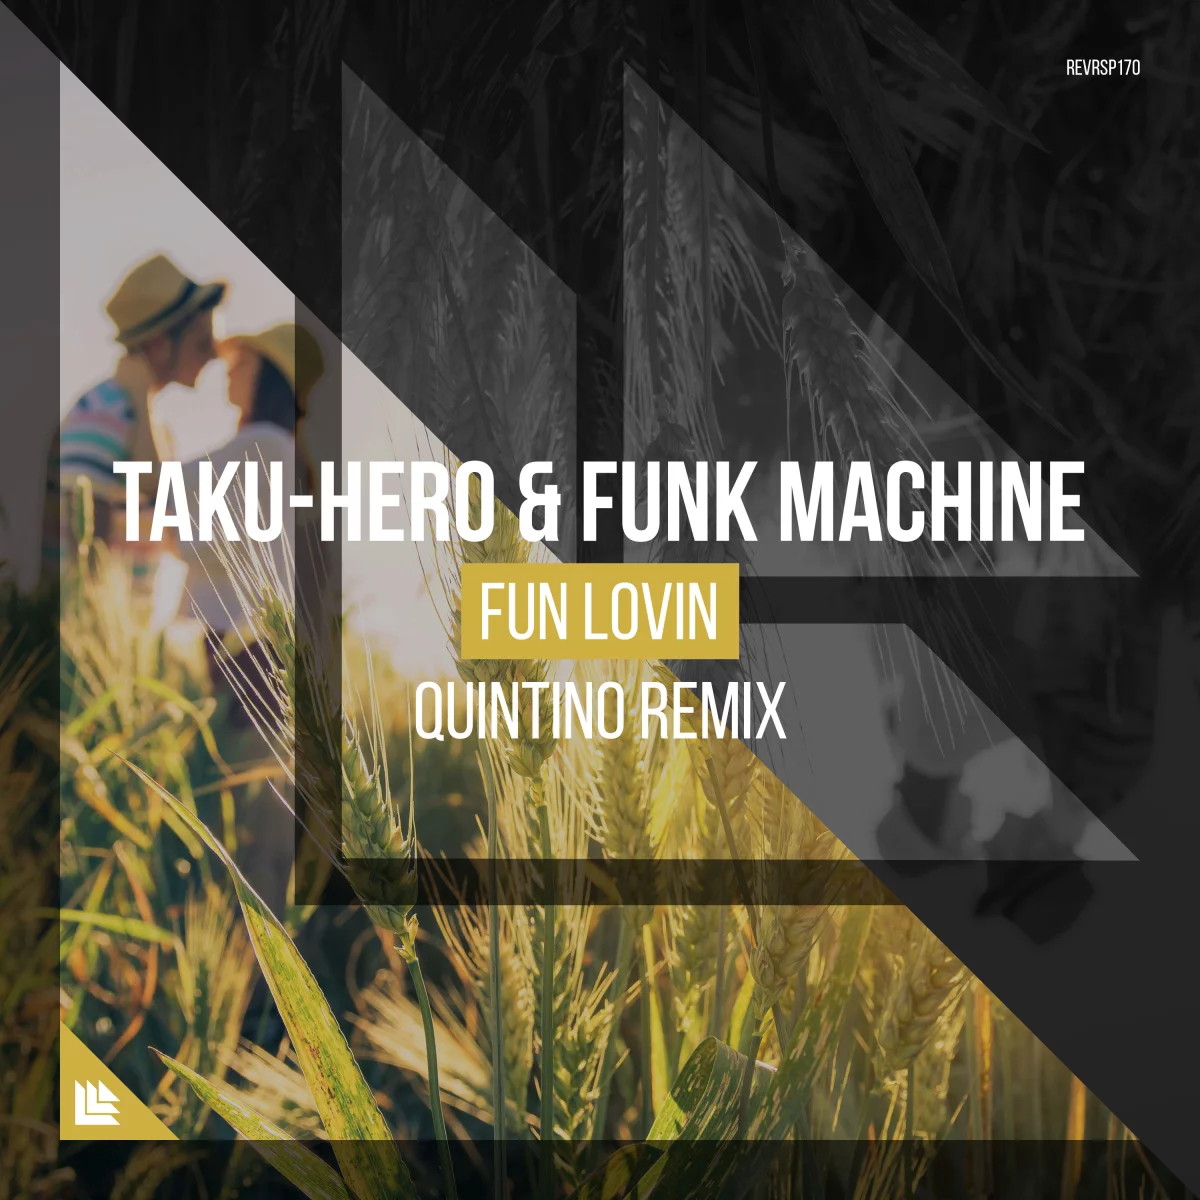 Fun Lovin (Quintino Remix) - Taku-Hero & Funk Machine